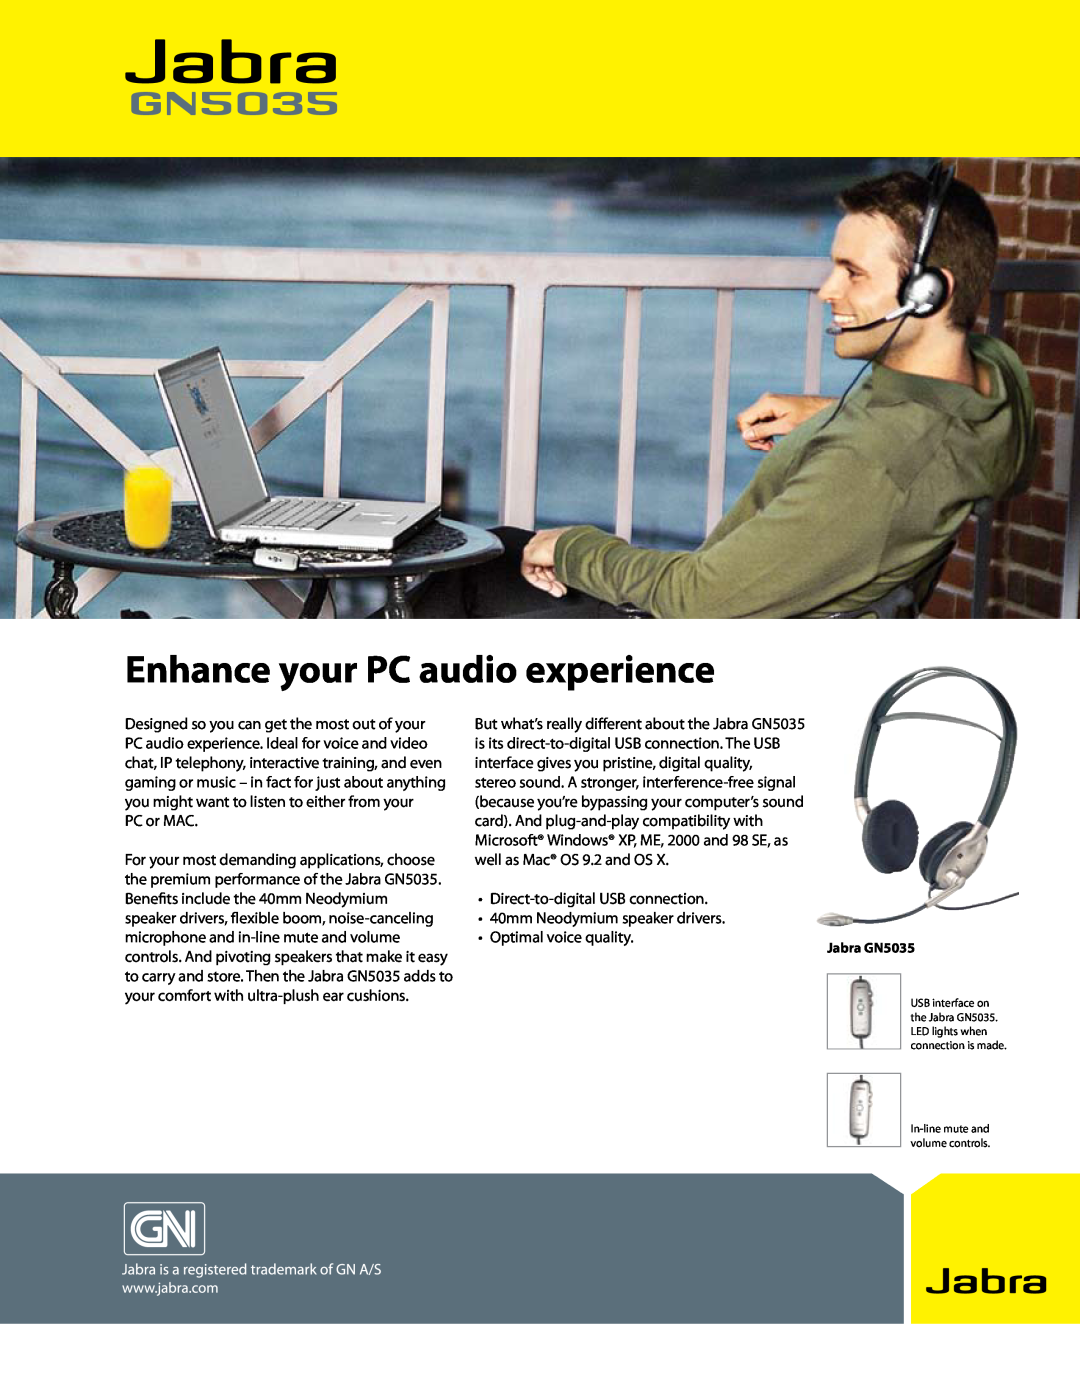 Jabra manual jabra, Jabra GN5035, Enhance your PC audio experience, PC or MAC, Direct-to-digitalUSB connection 